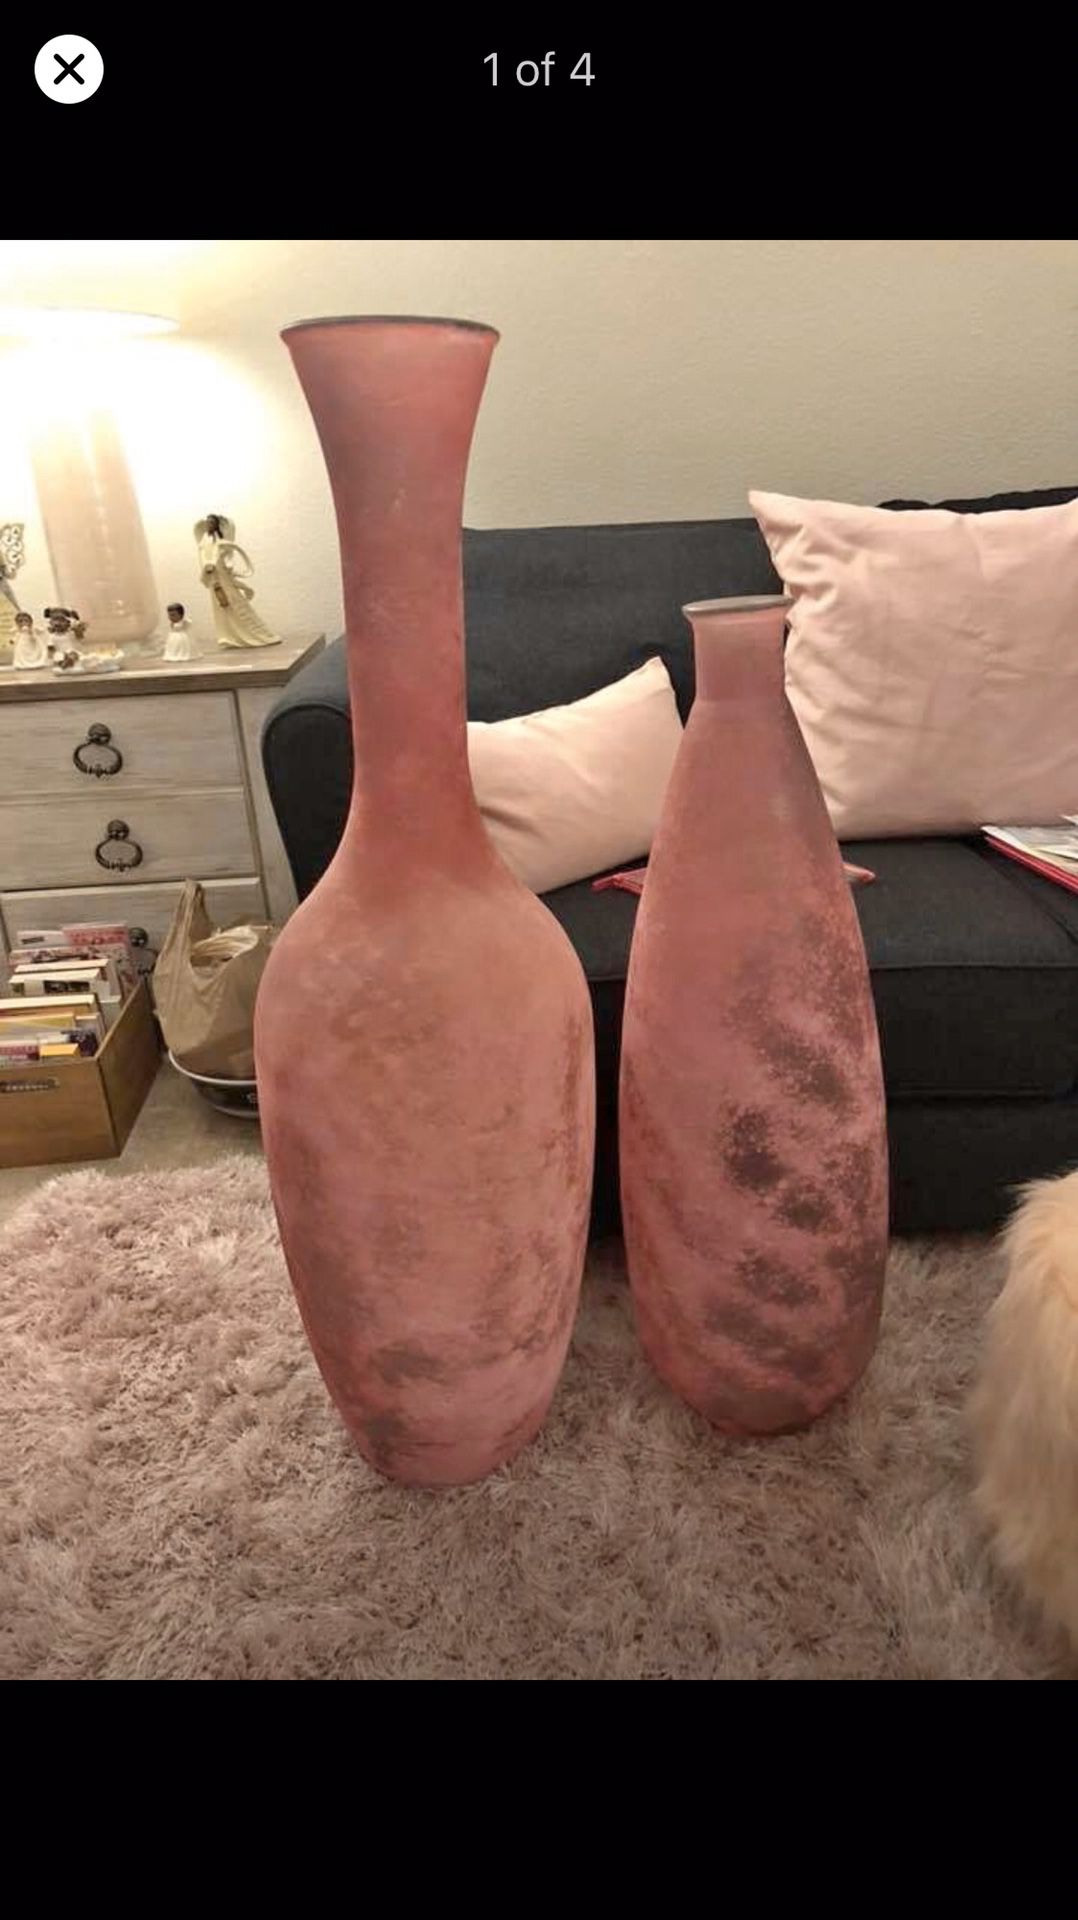 Pink Vases